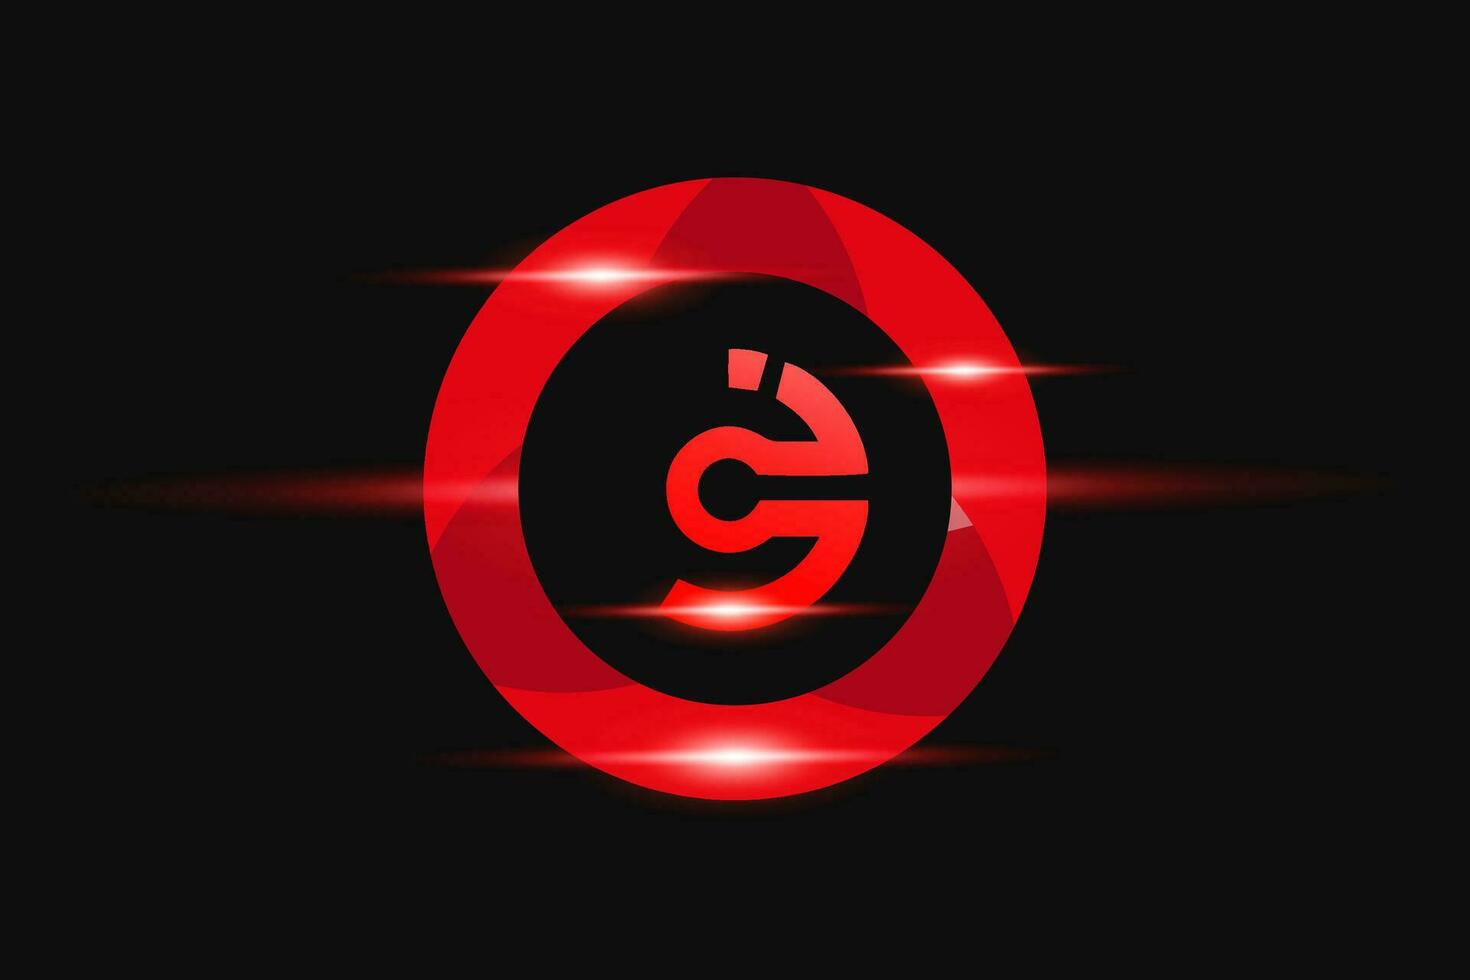 CI Red logo Design. Vector logo design for business.